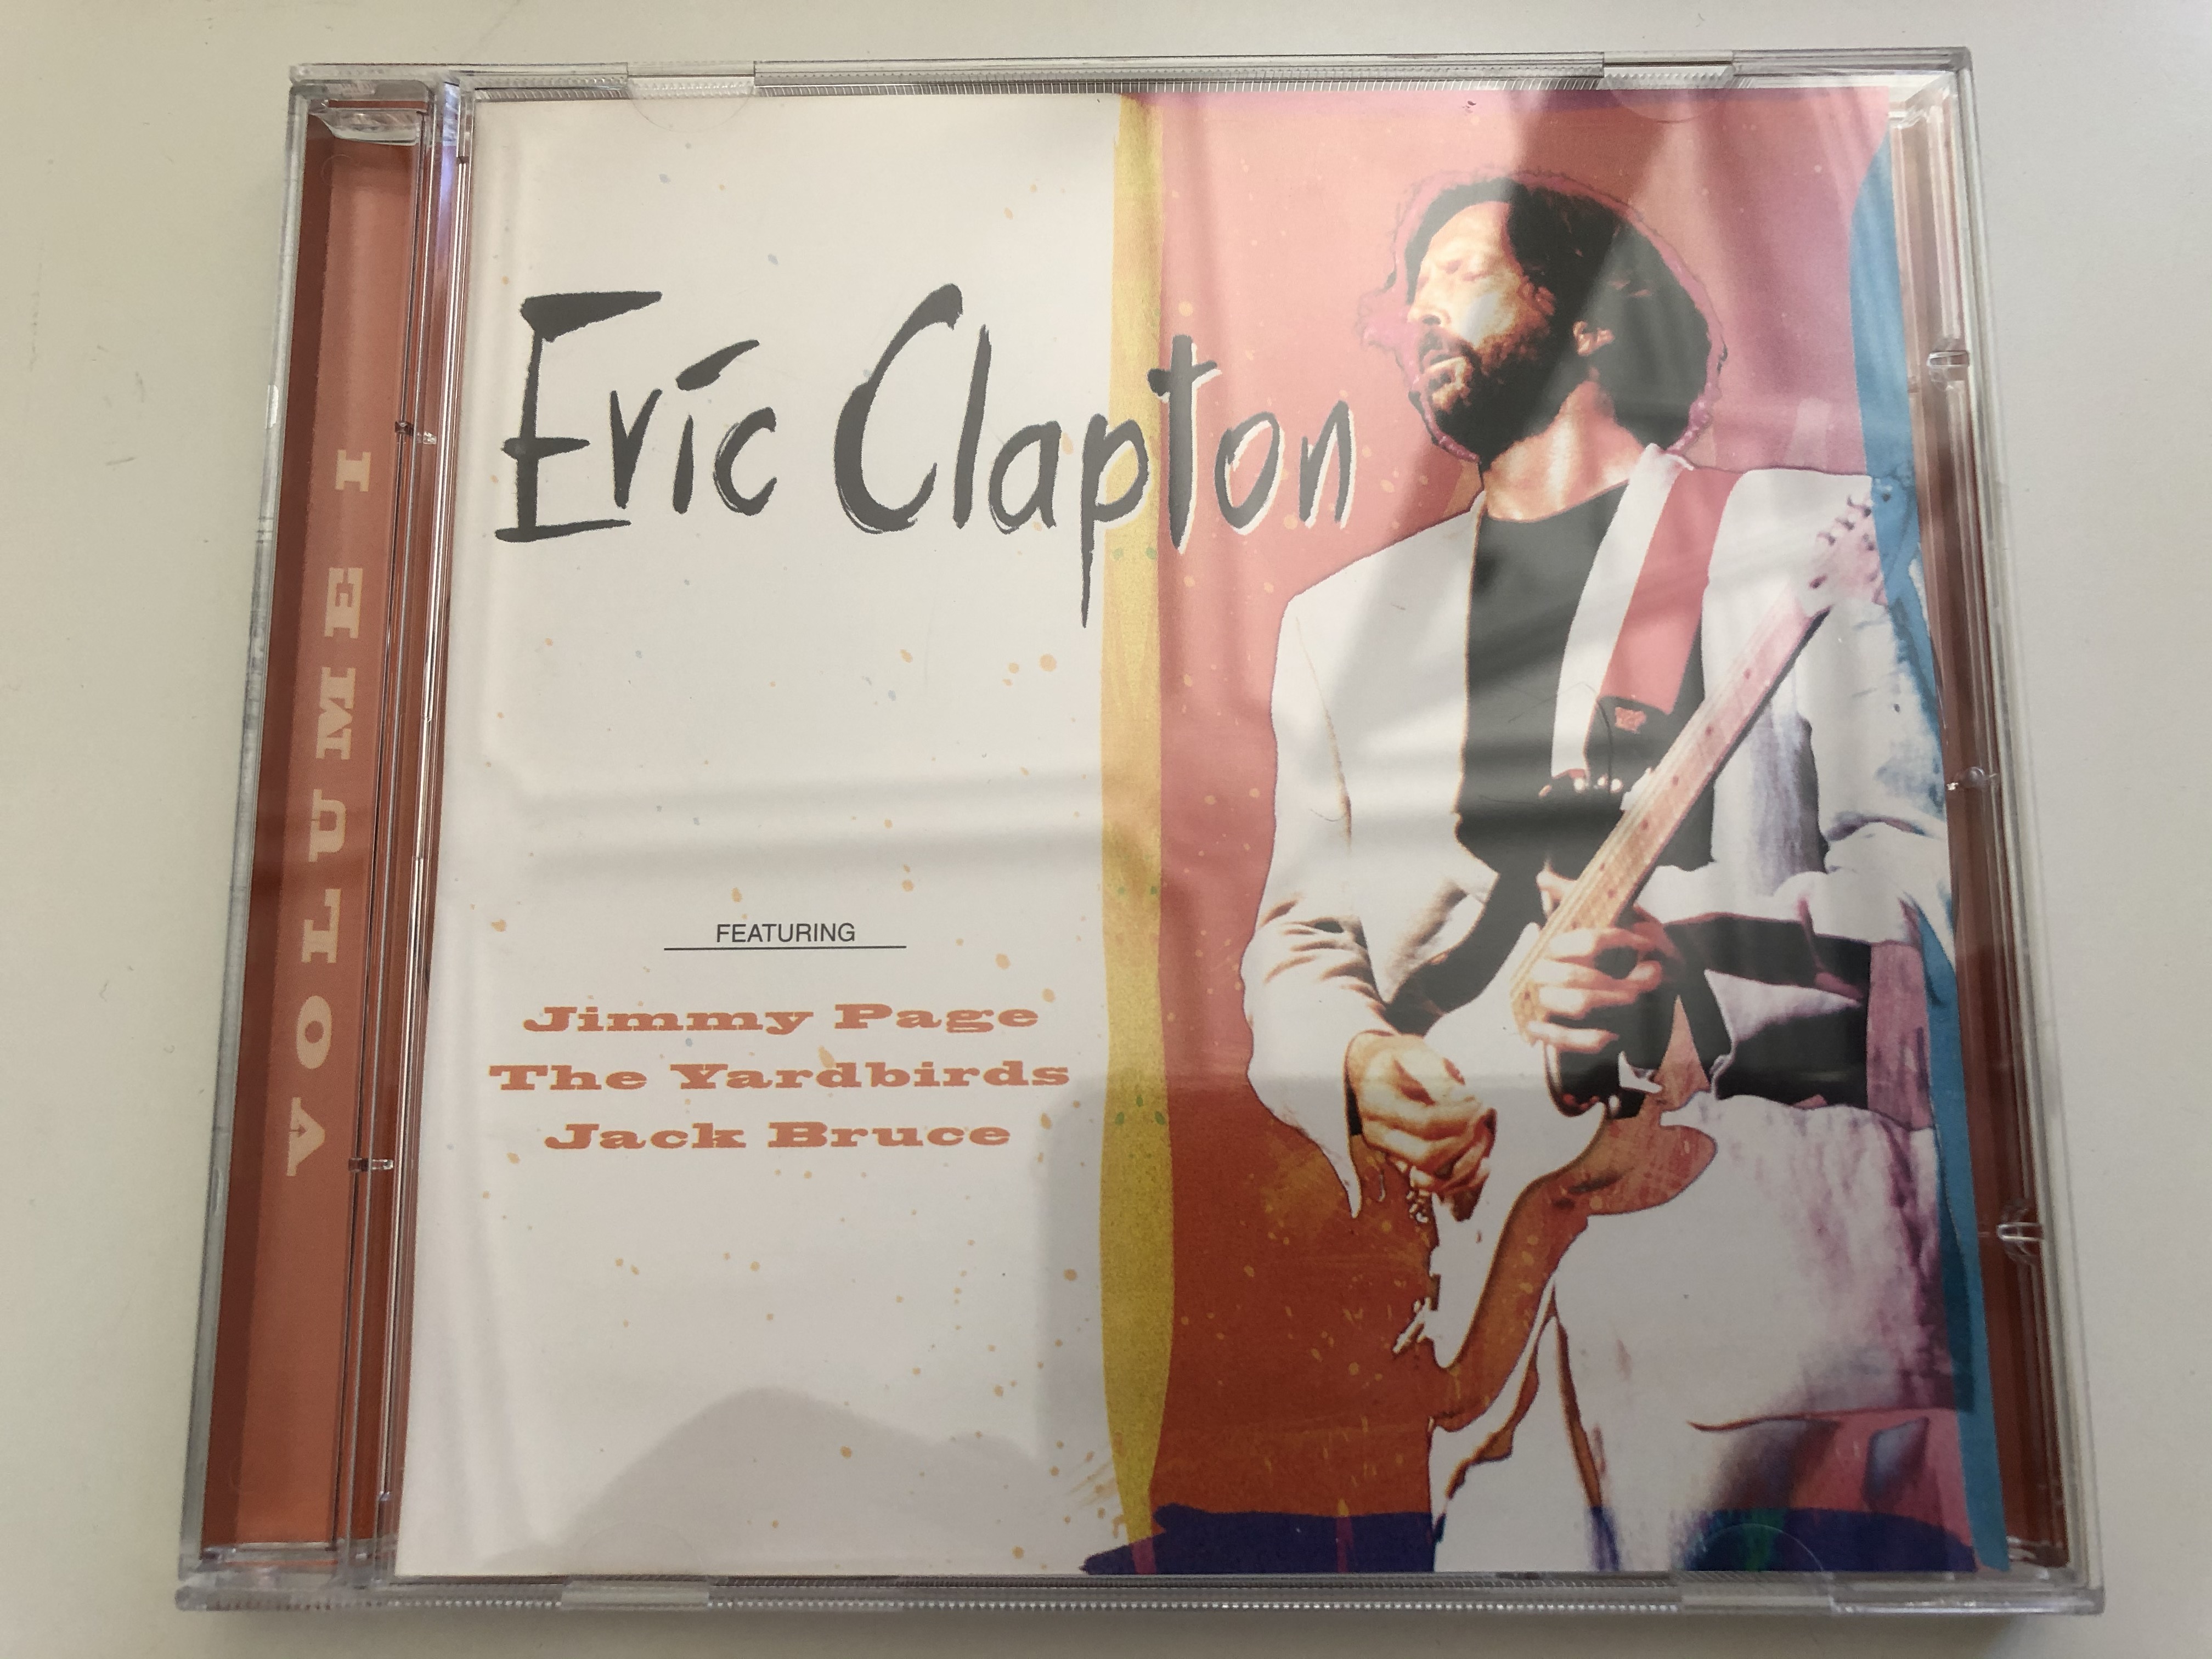 eric-clapton-volume-1-featuring-jimmy-page-the-yardbirds-jack-bruce-eurotrend-audio-cd-cd-157-1-.jpg